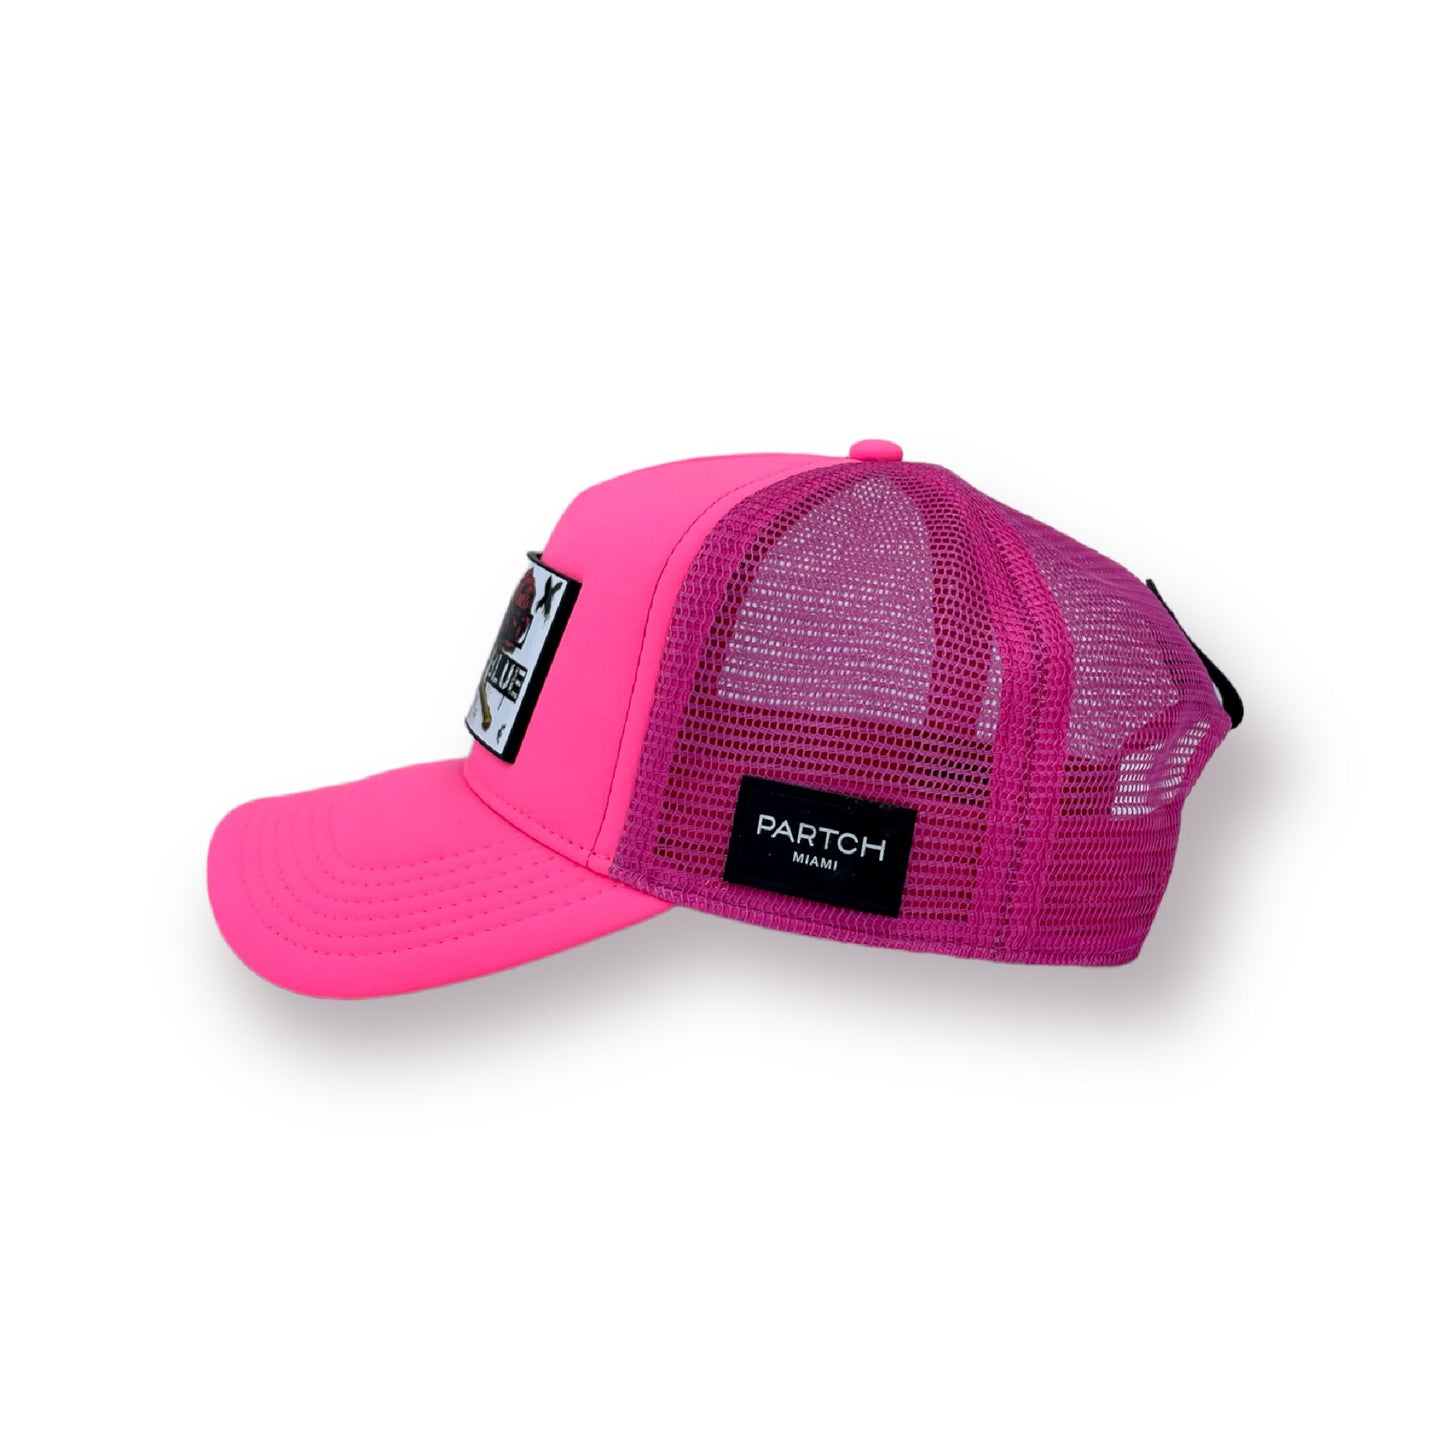 PARTCH Fashion trucker hat in pink logo art roses